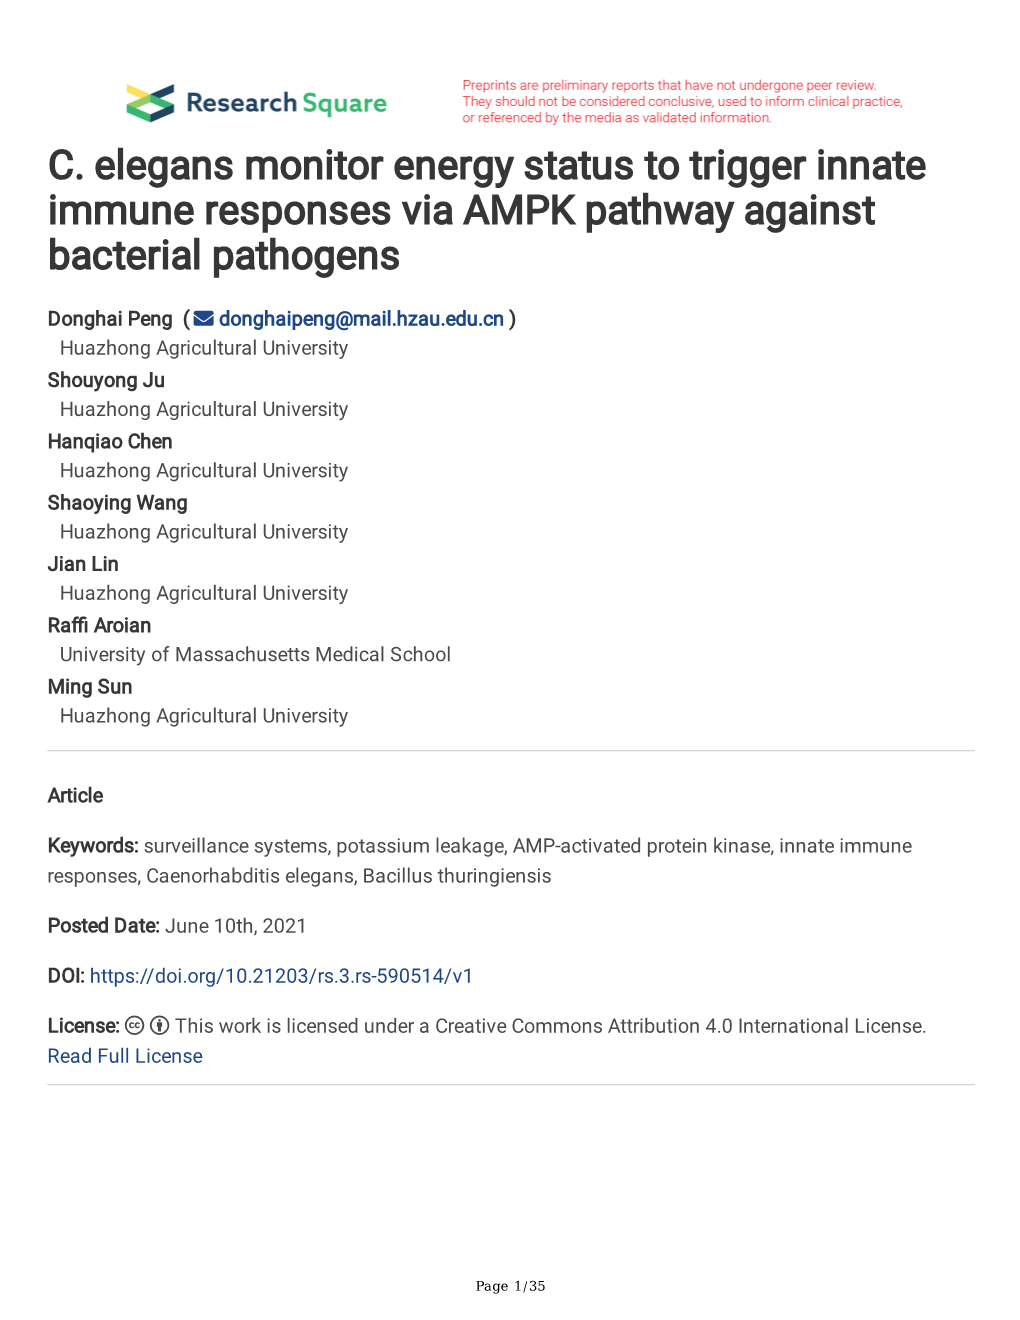 C. Elegans Monitor Energy Status to Trigger Innate Immune Responses Via AMPK Pathway Against Bacterial Pathogens